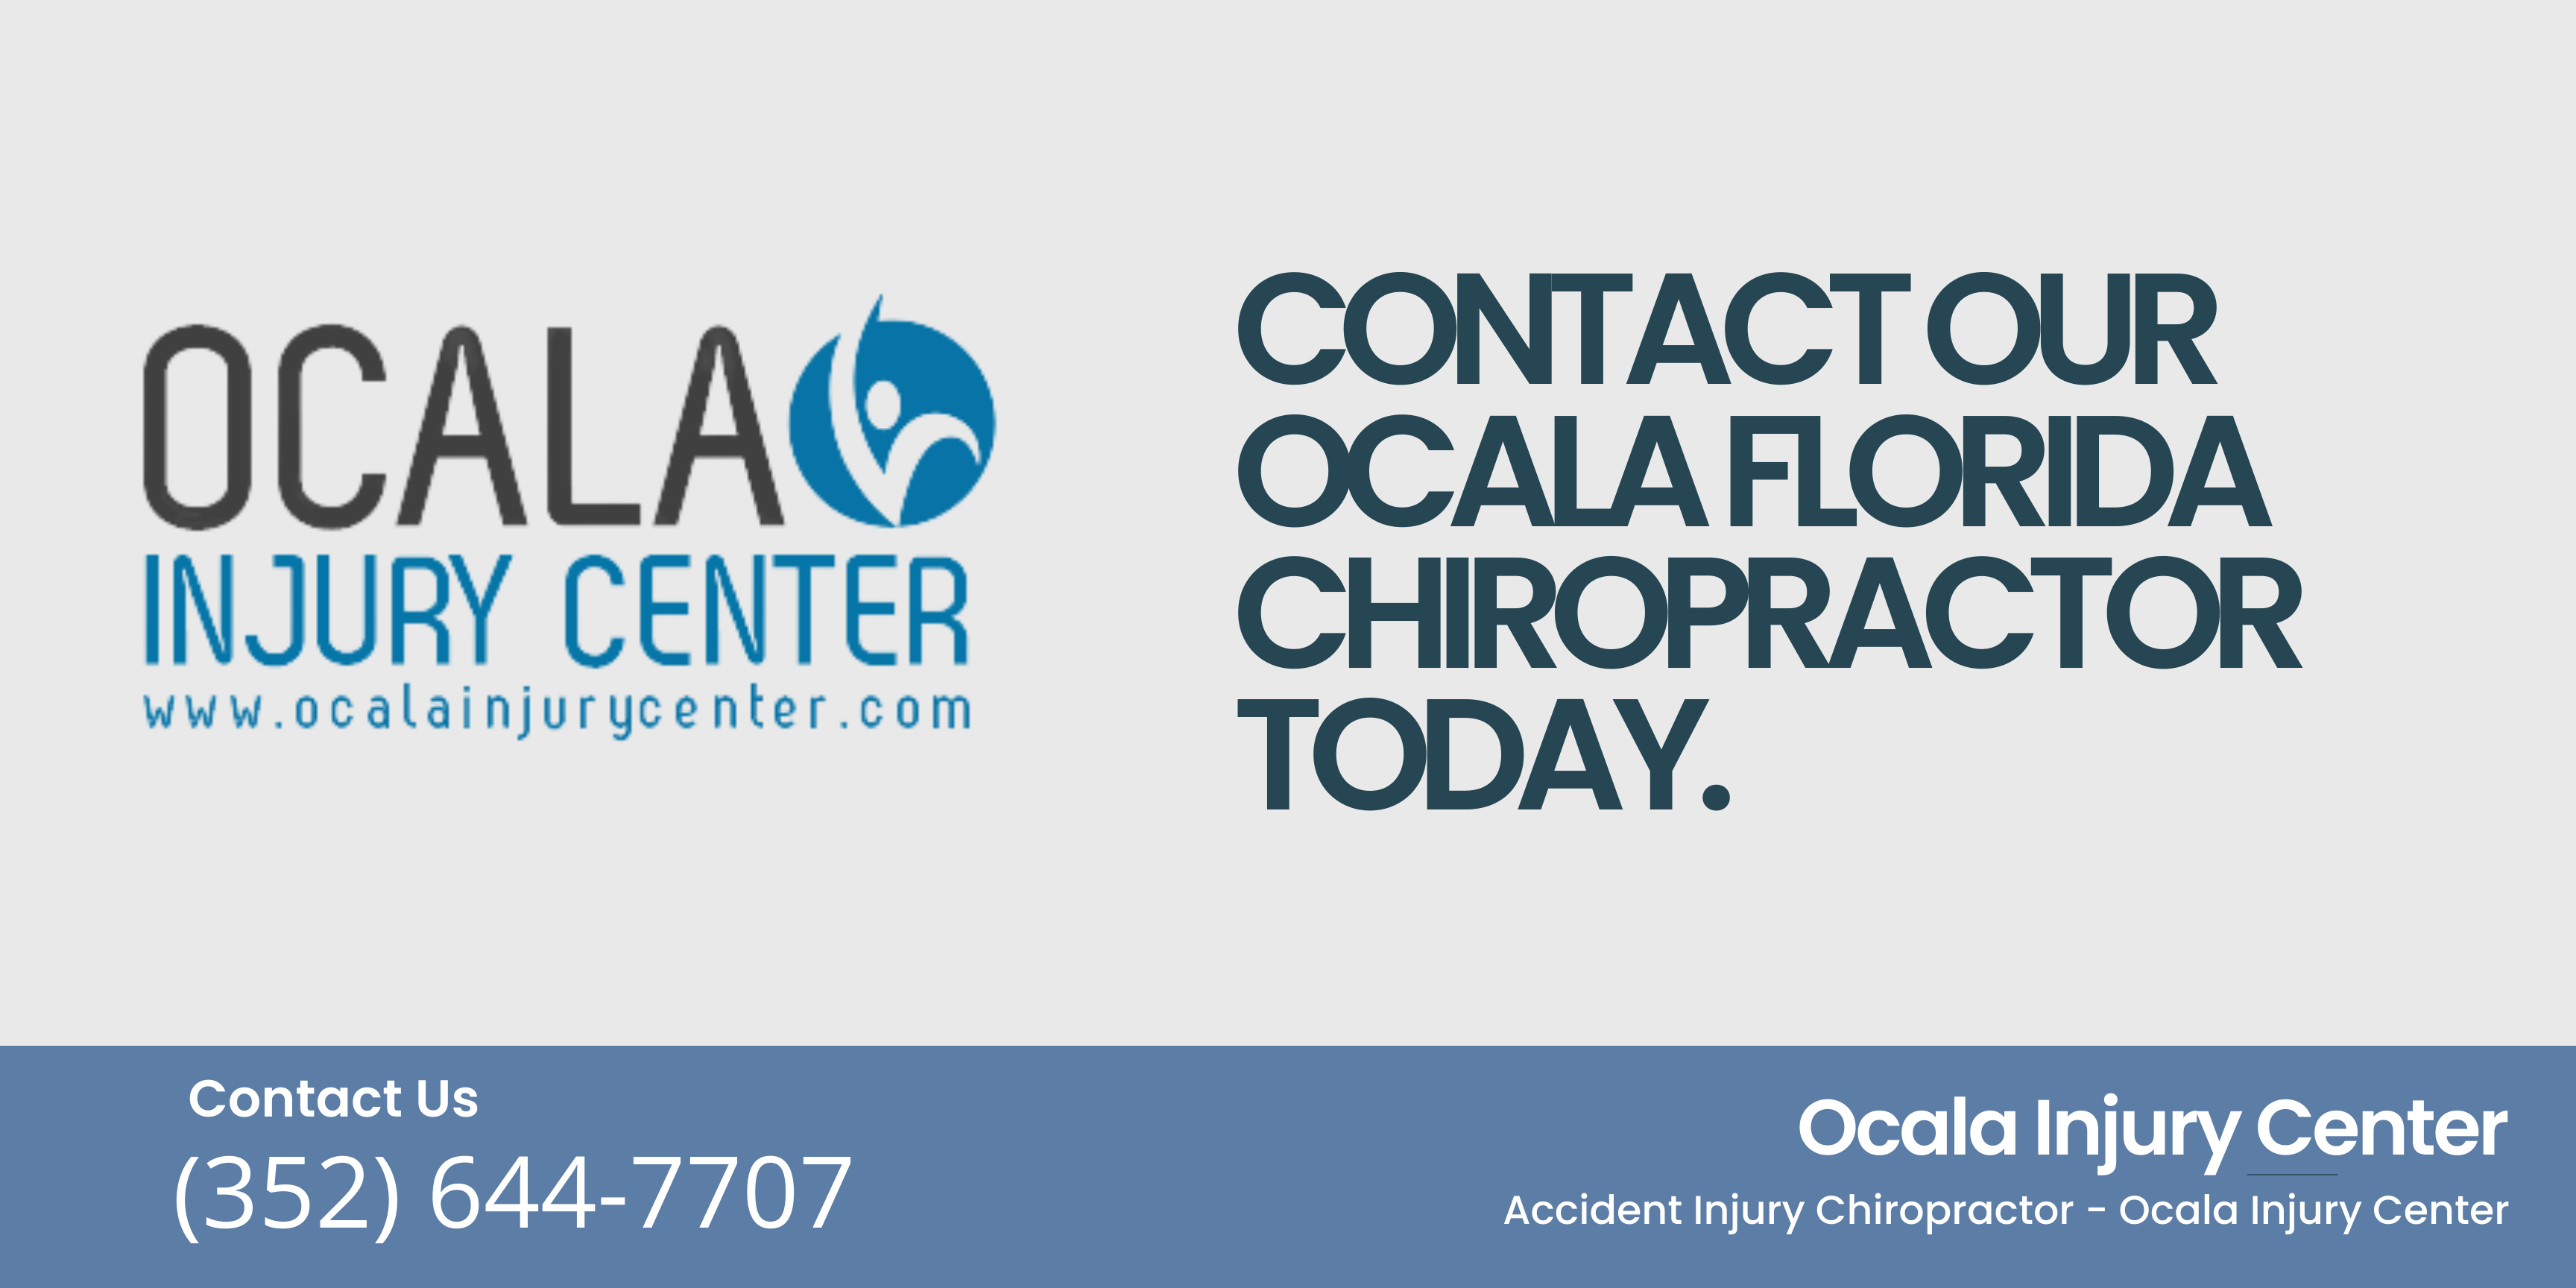 Contact our Ocala, Florida Chiropractor